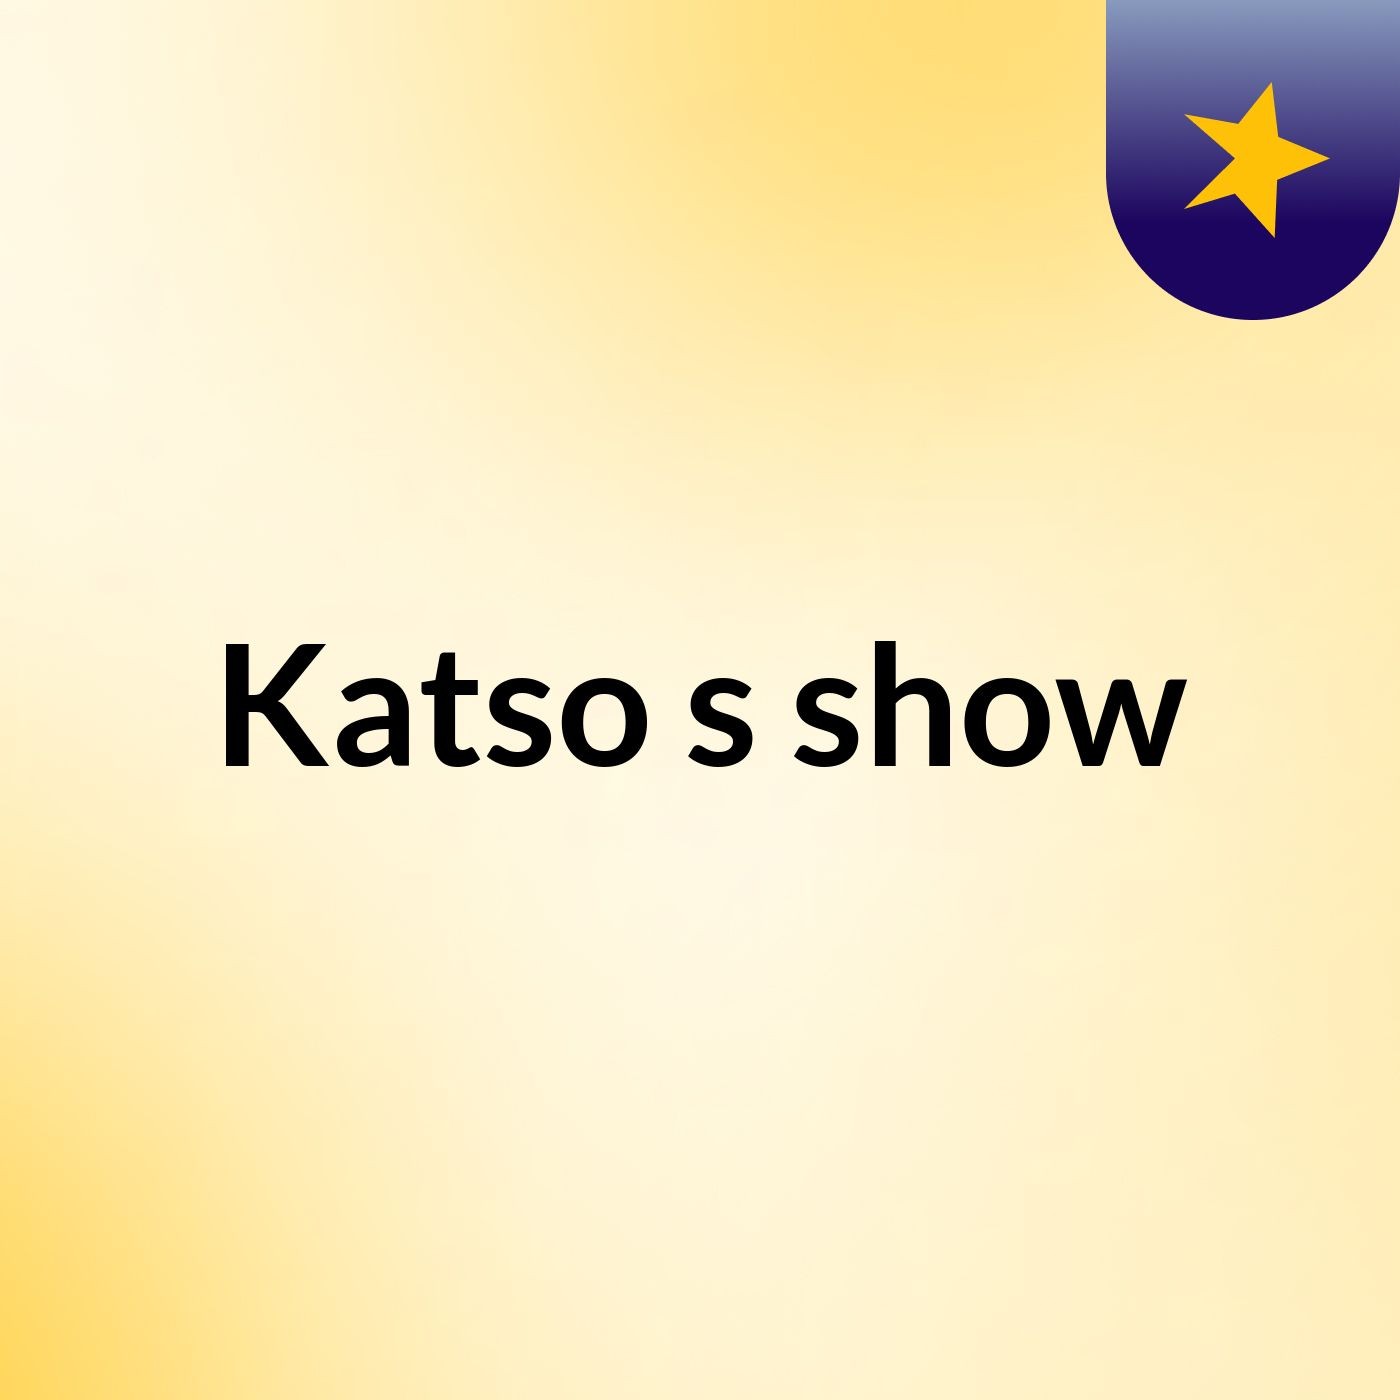 Katso's show